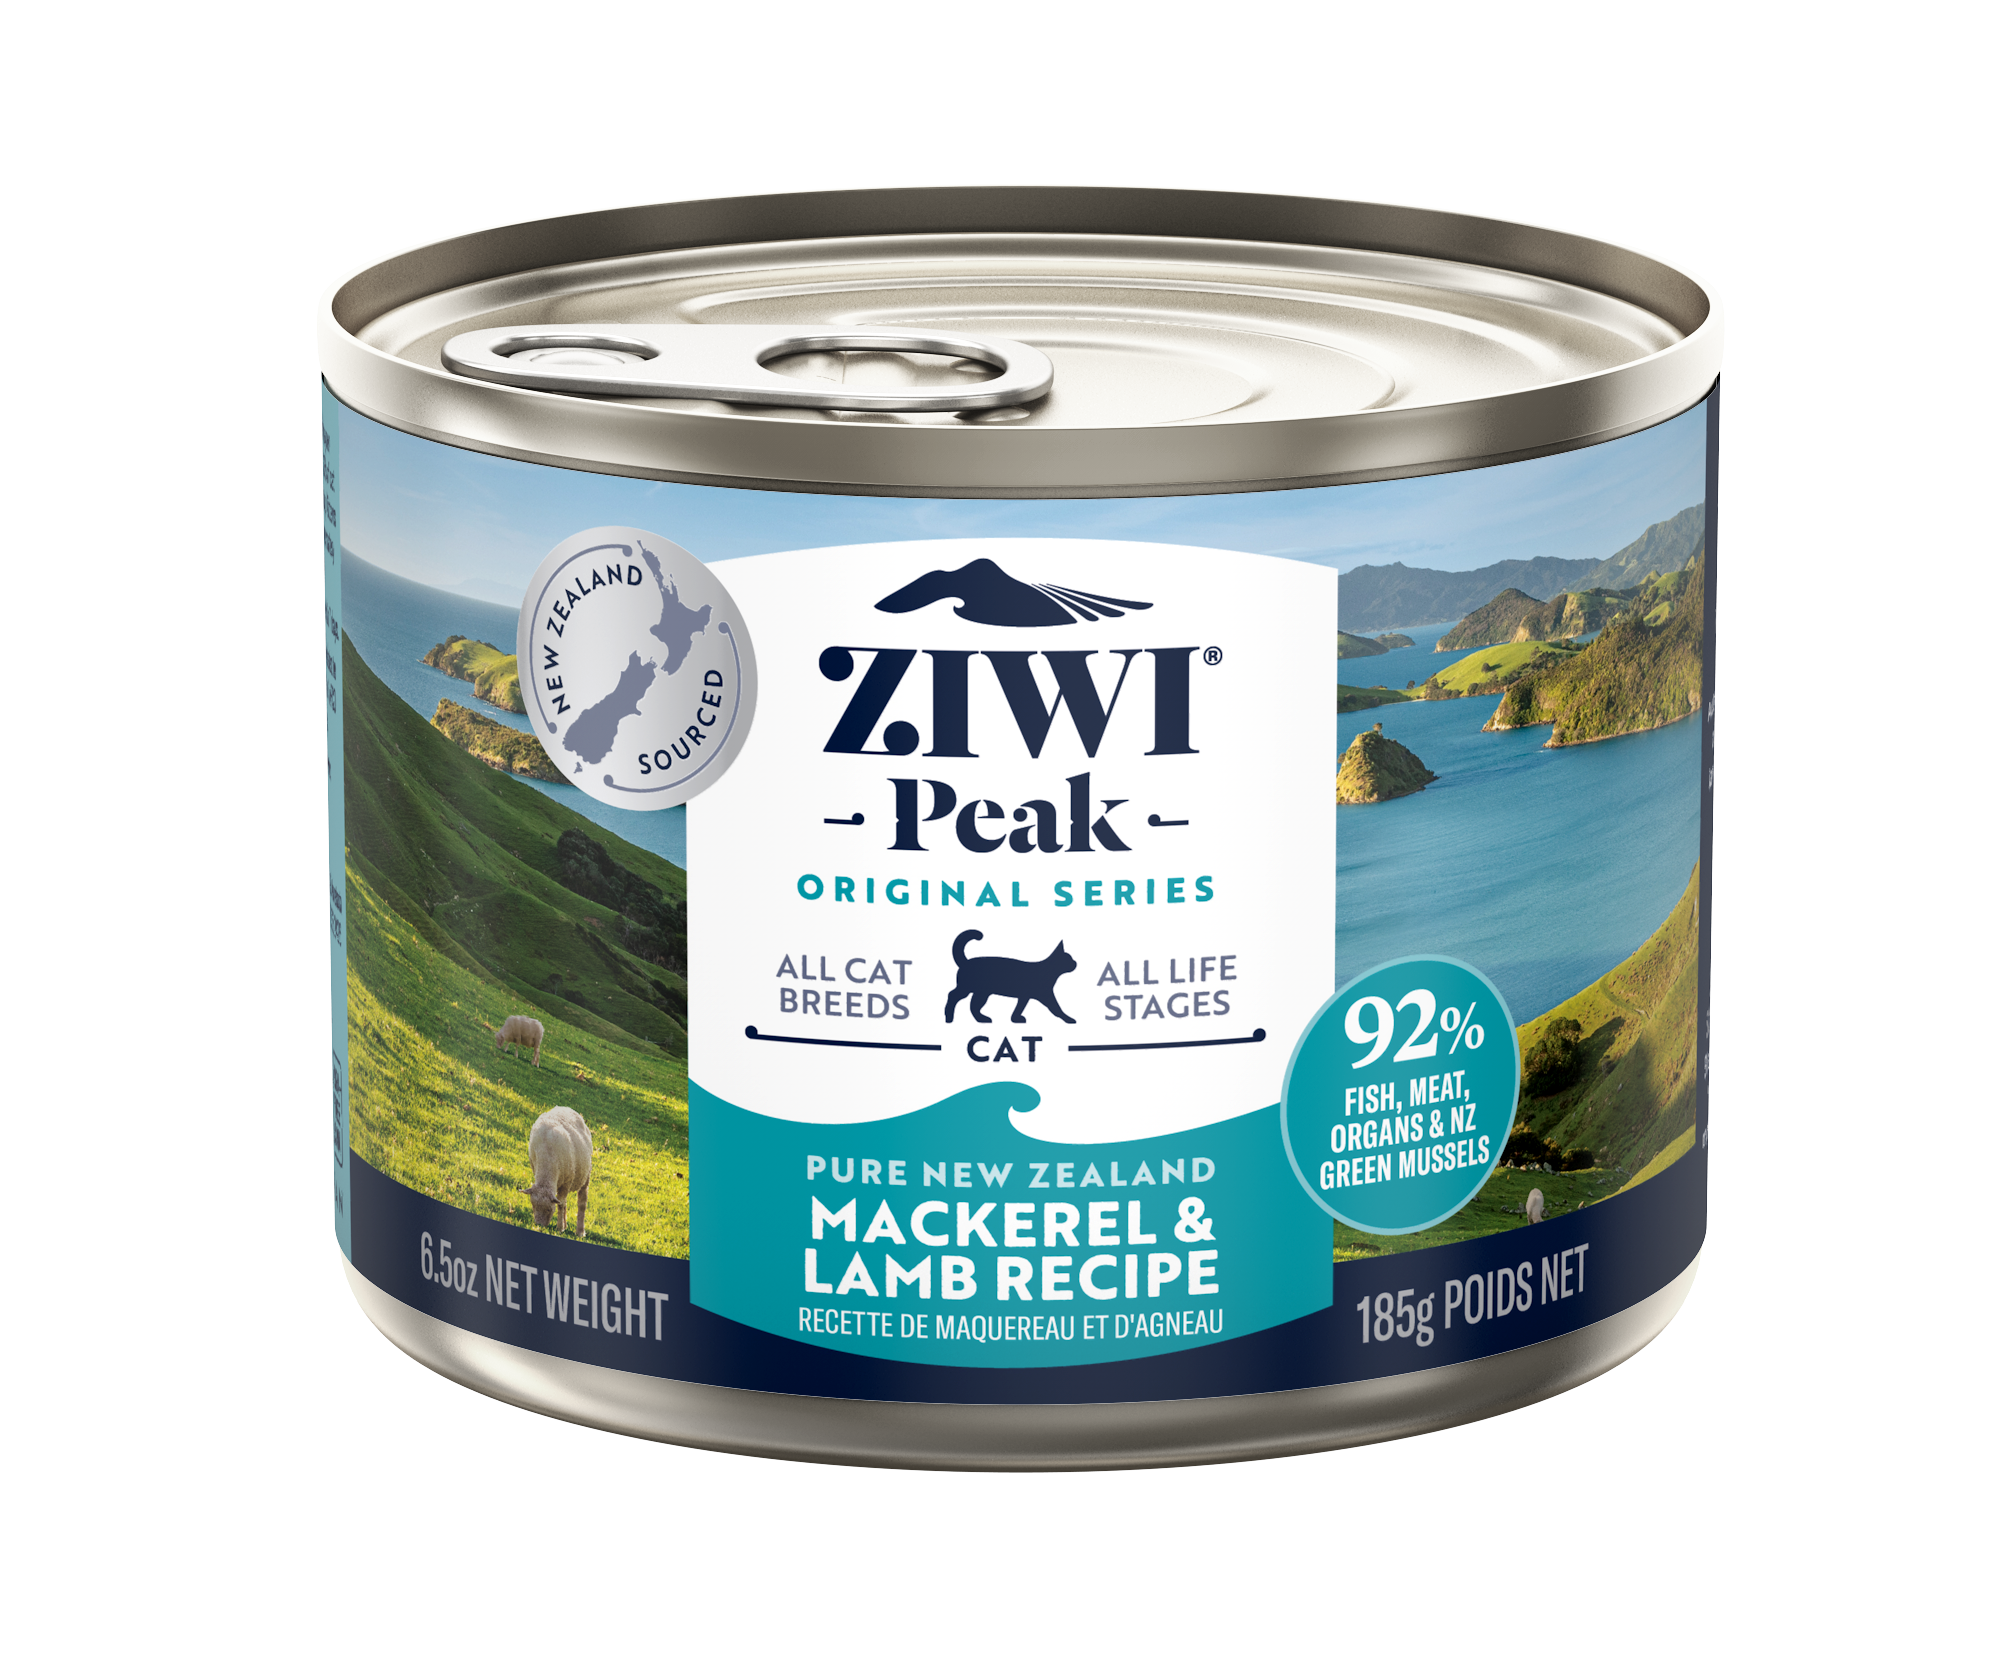 Ziwi cat food